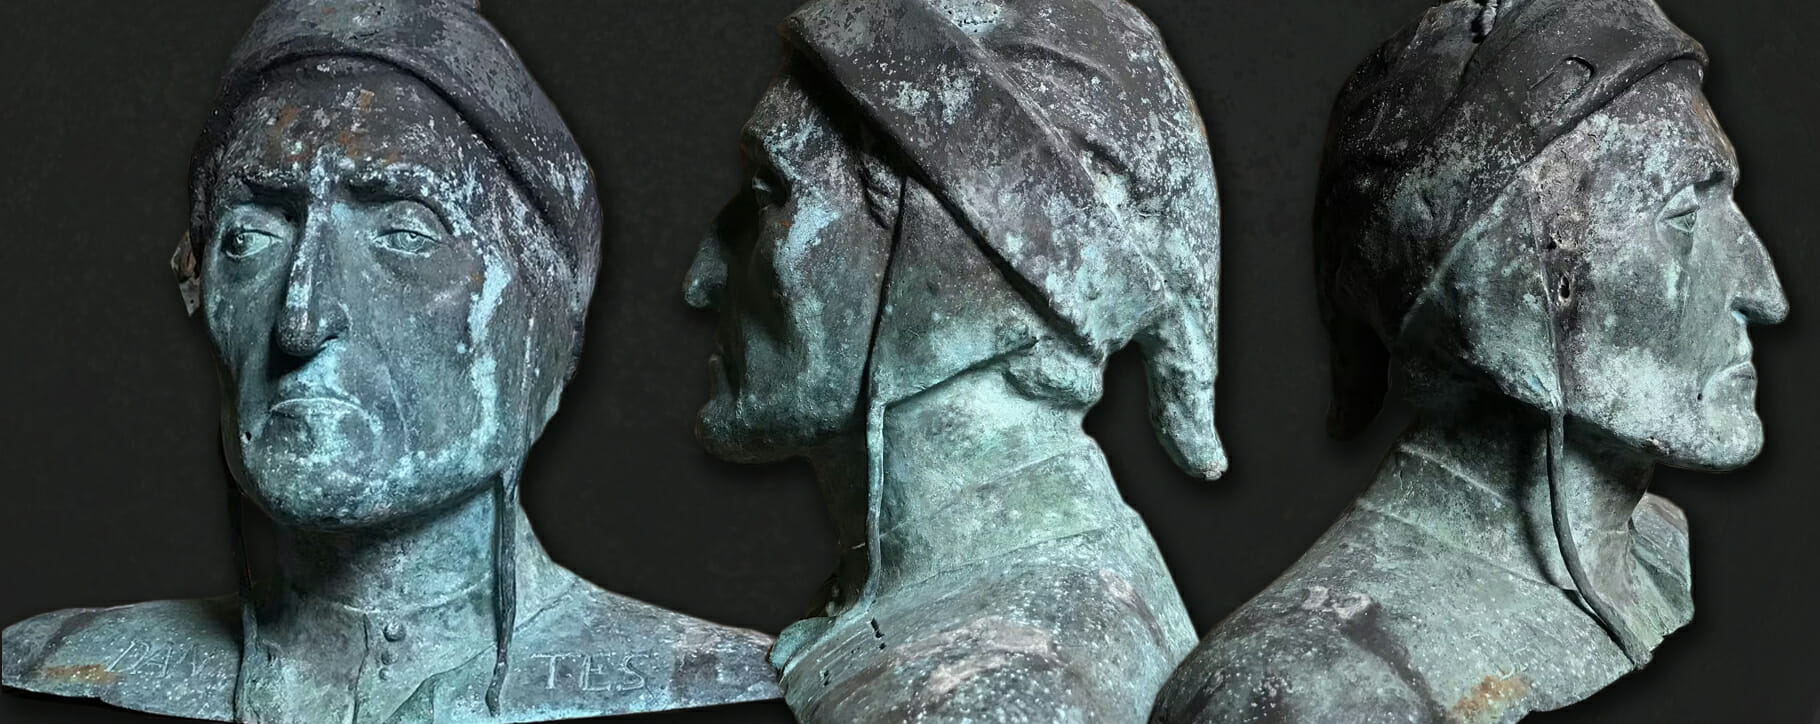 Dante bust - bronze sculpture restoration before